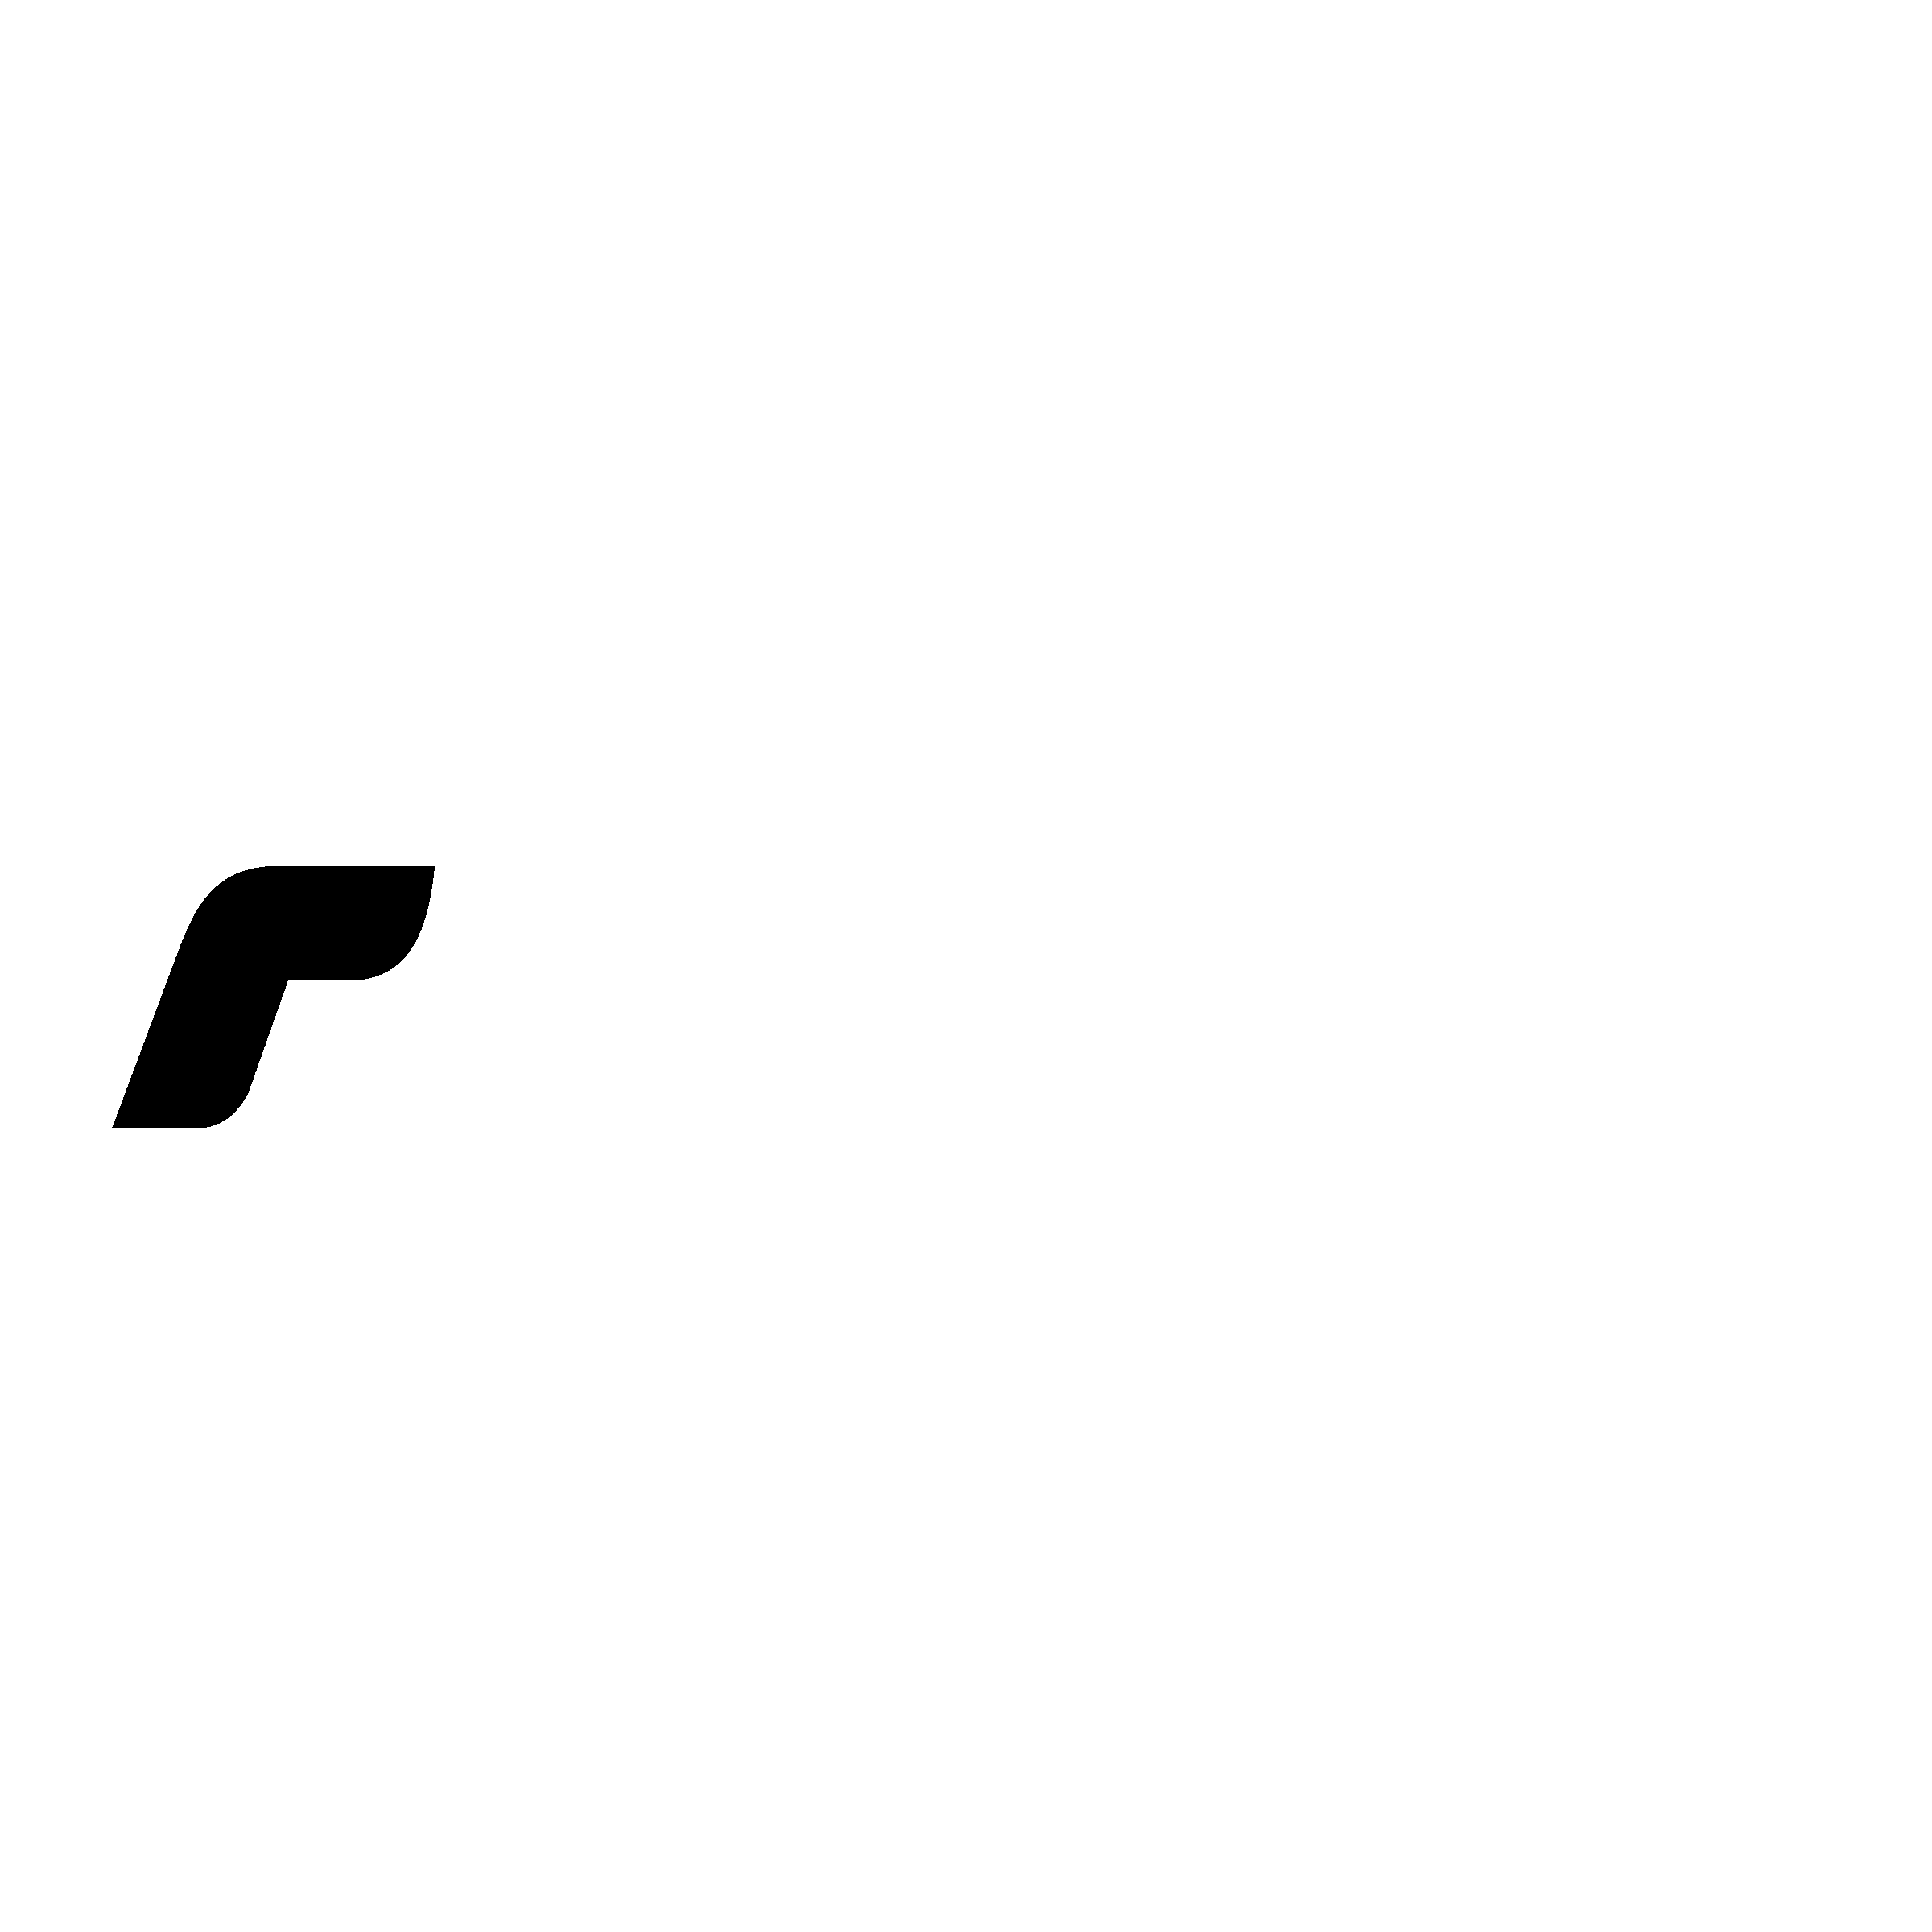 Fujikura Logo - Fujikura Logo PNG Transparent & SVG Vector - Freebie Supply